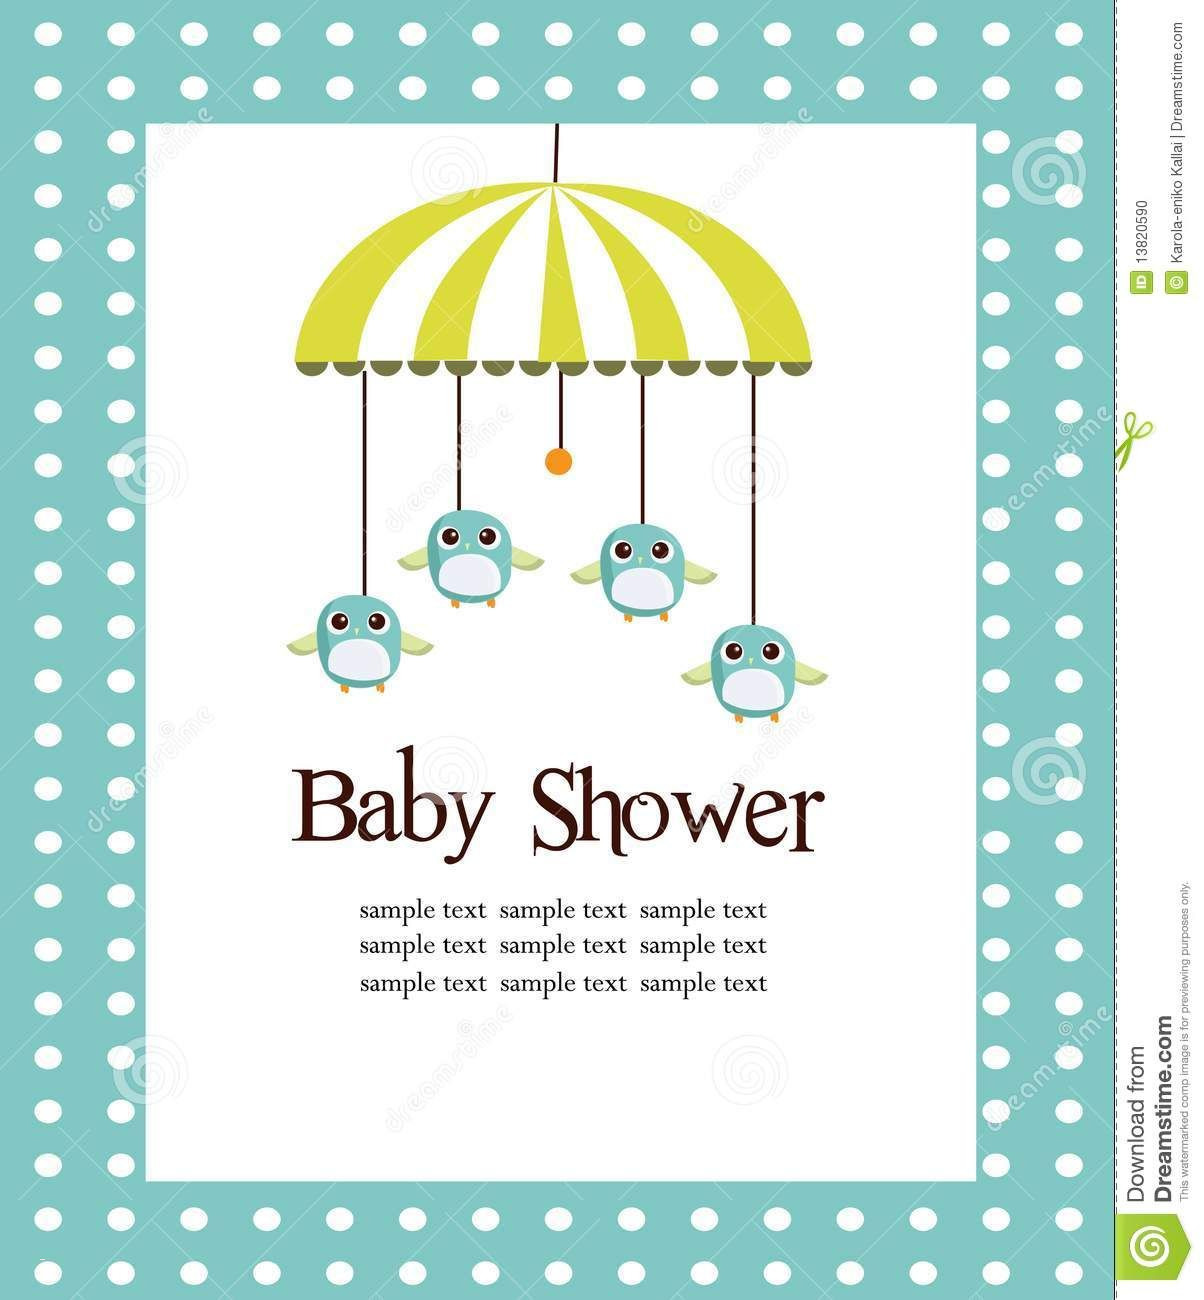 Full Size of Baby Shower:graceful Baby Shower Cards Image Designs Baby Shower Cards Arreglos Baby Shower Baby Shower Venue Ideas Elegant Baby Shower Arreglos De Baby Shower Baby Shower Diaper Game Baby Shower Menu